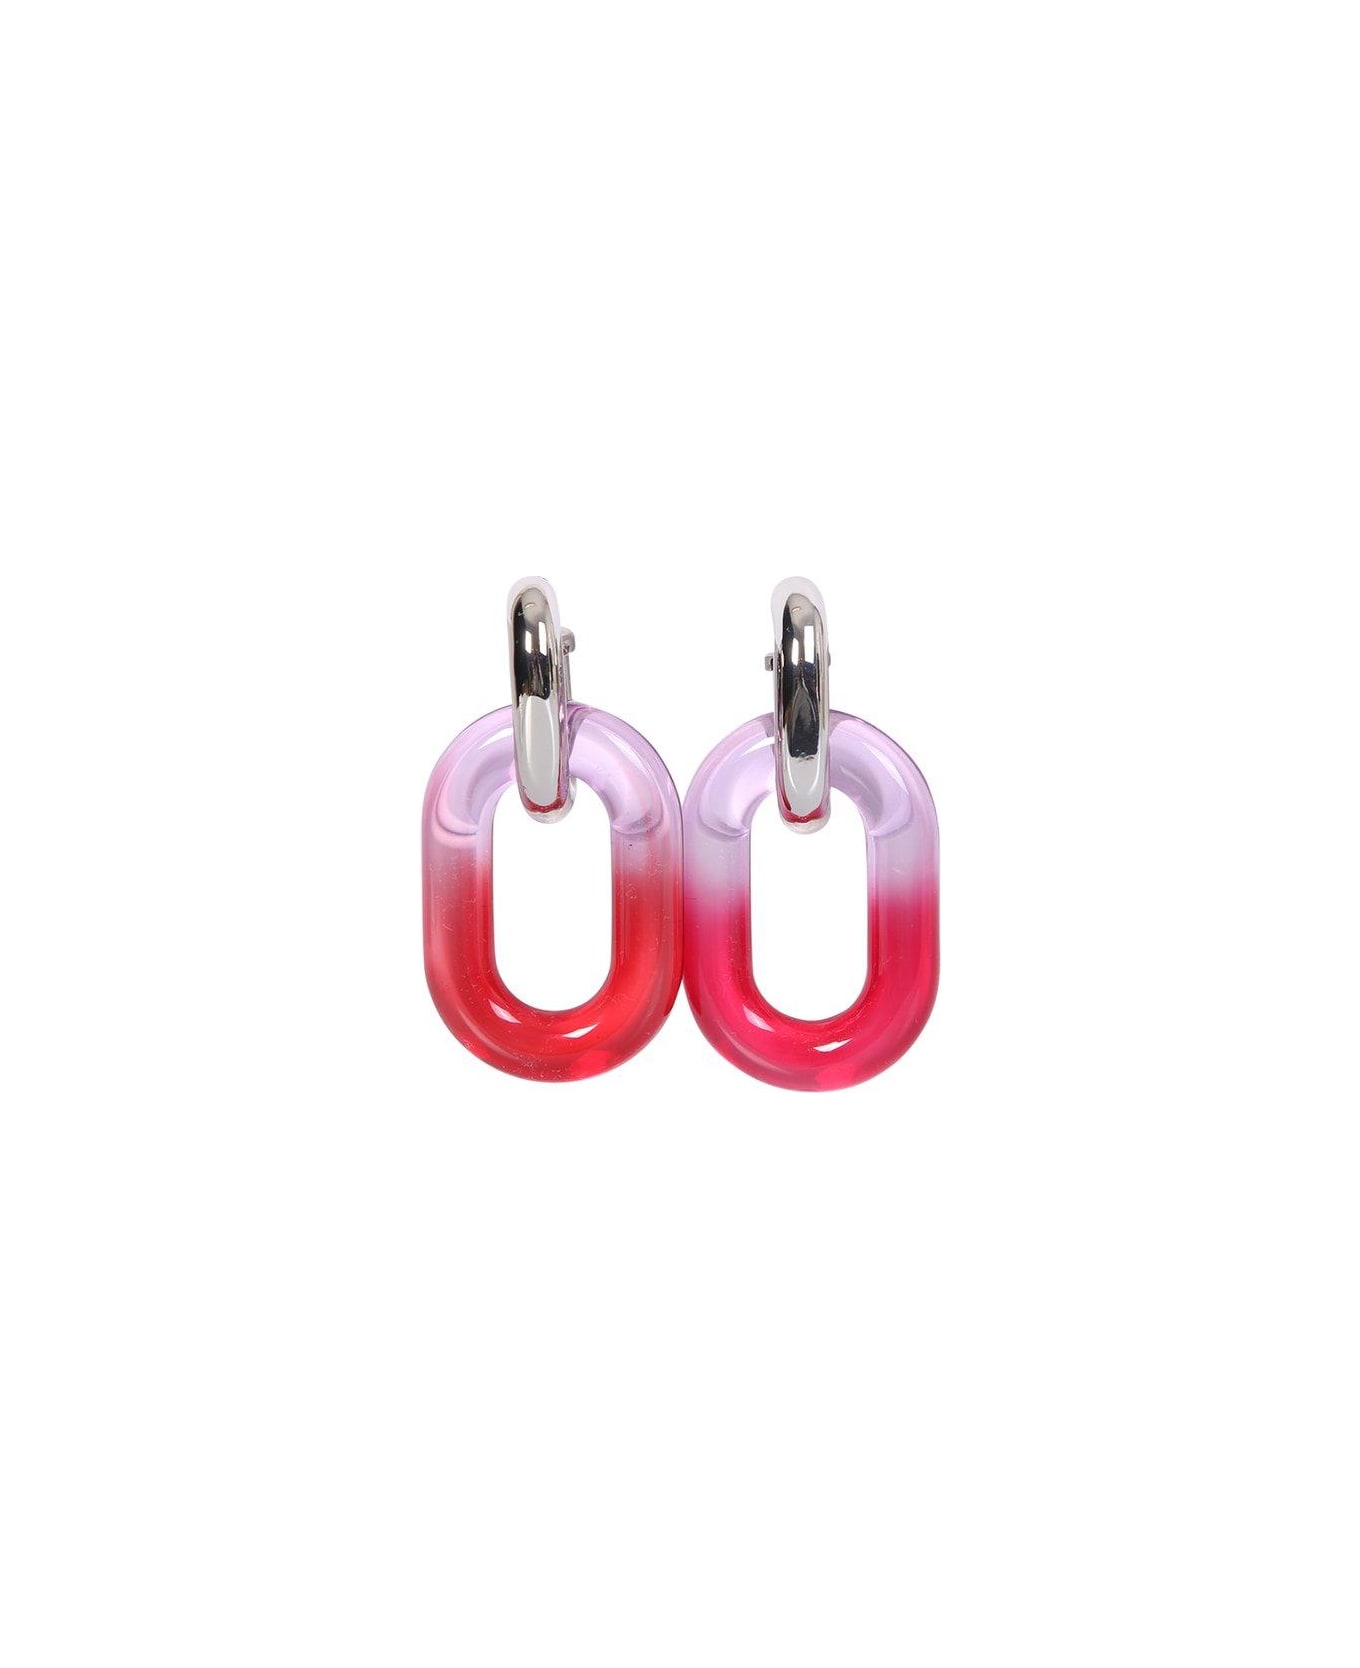 Paco Rabanne Iconic Double Hoop Earrings - SILVER/PINK